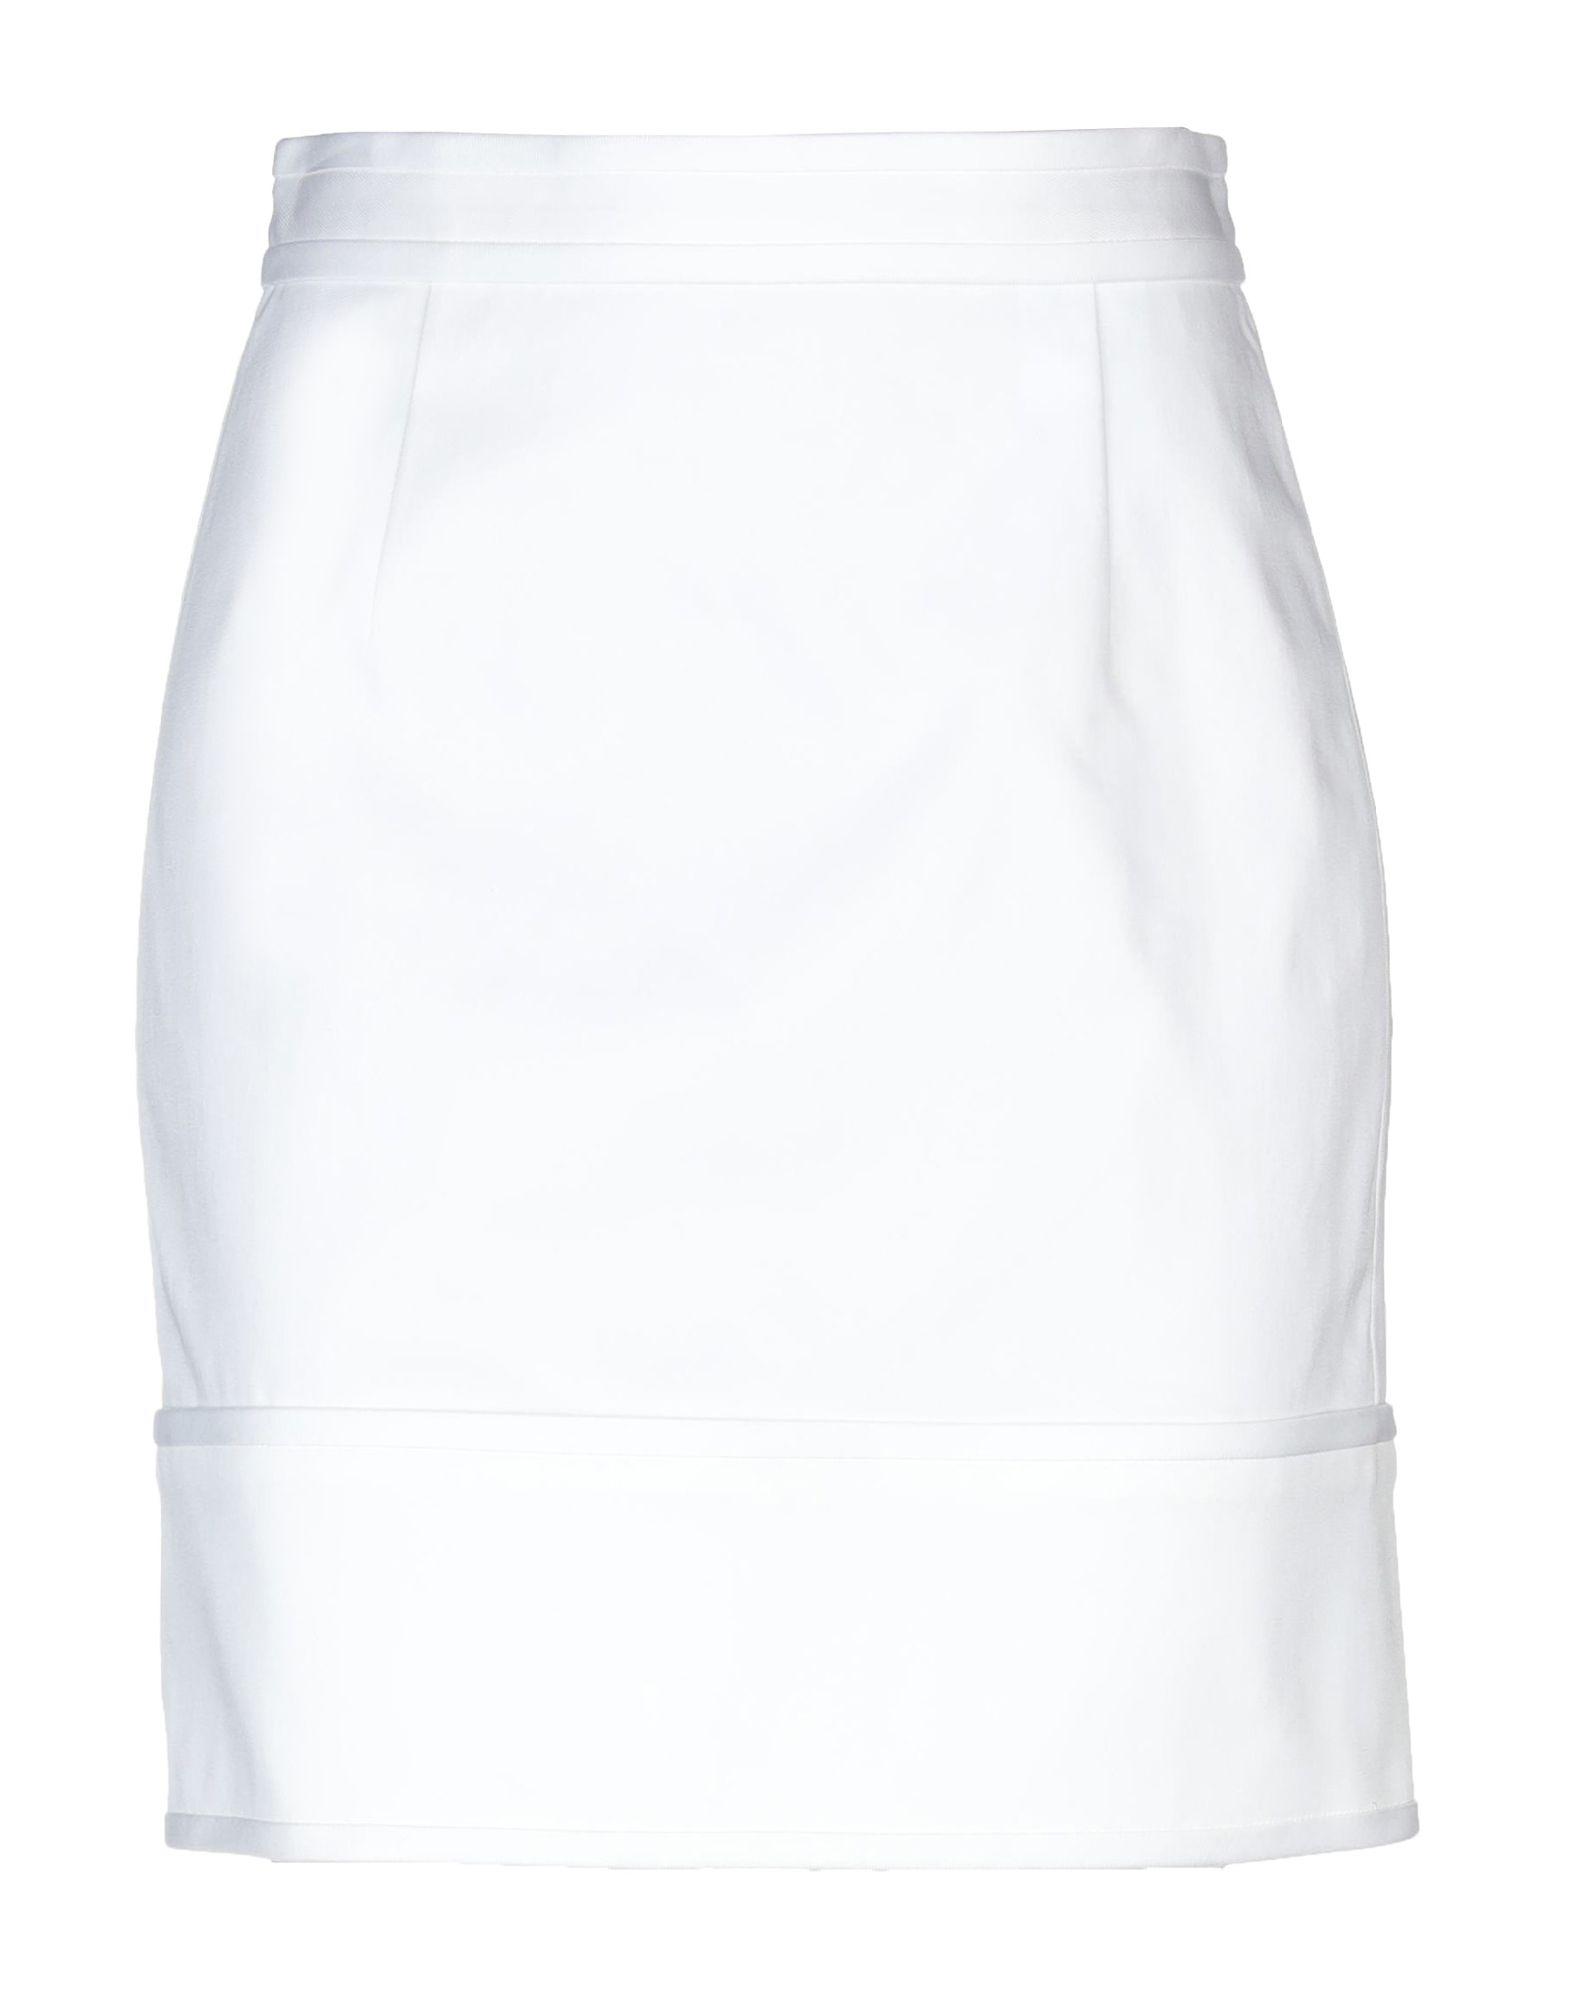 DSquared² Cotton Knee Length Skirt in White - Lyst